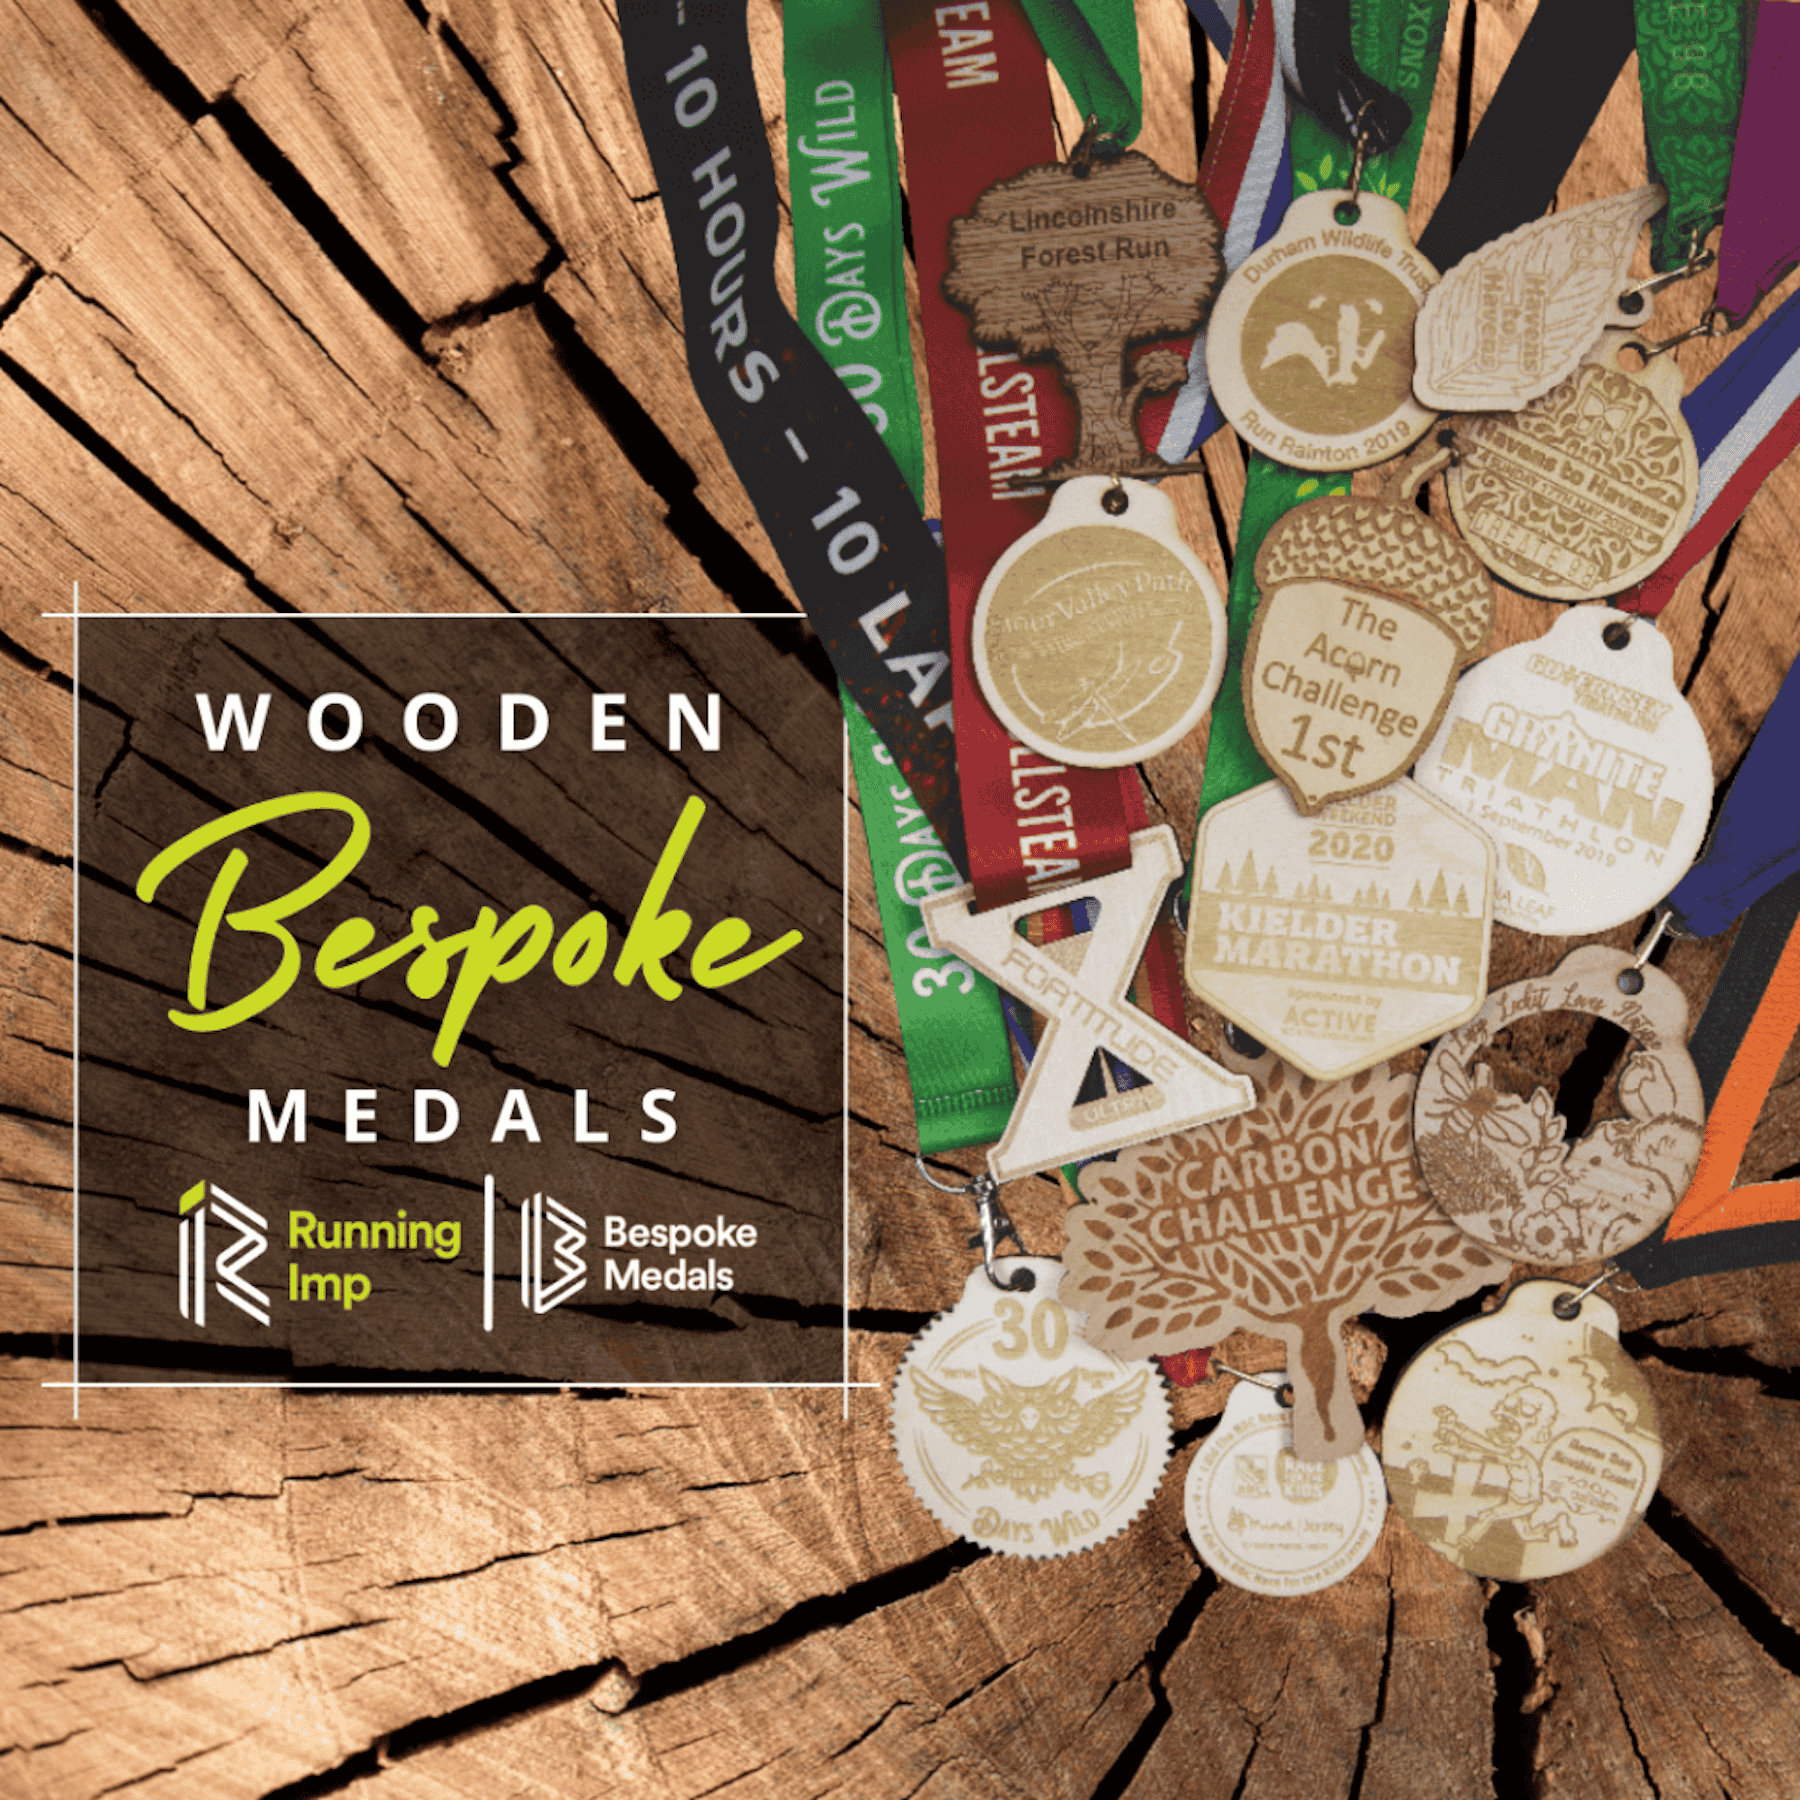 Wooden Bespoke Medals